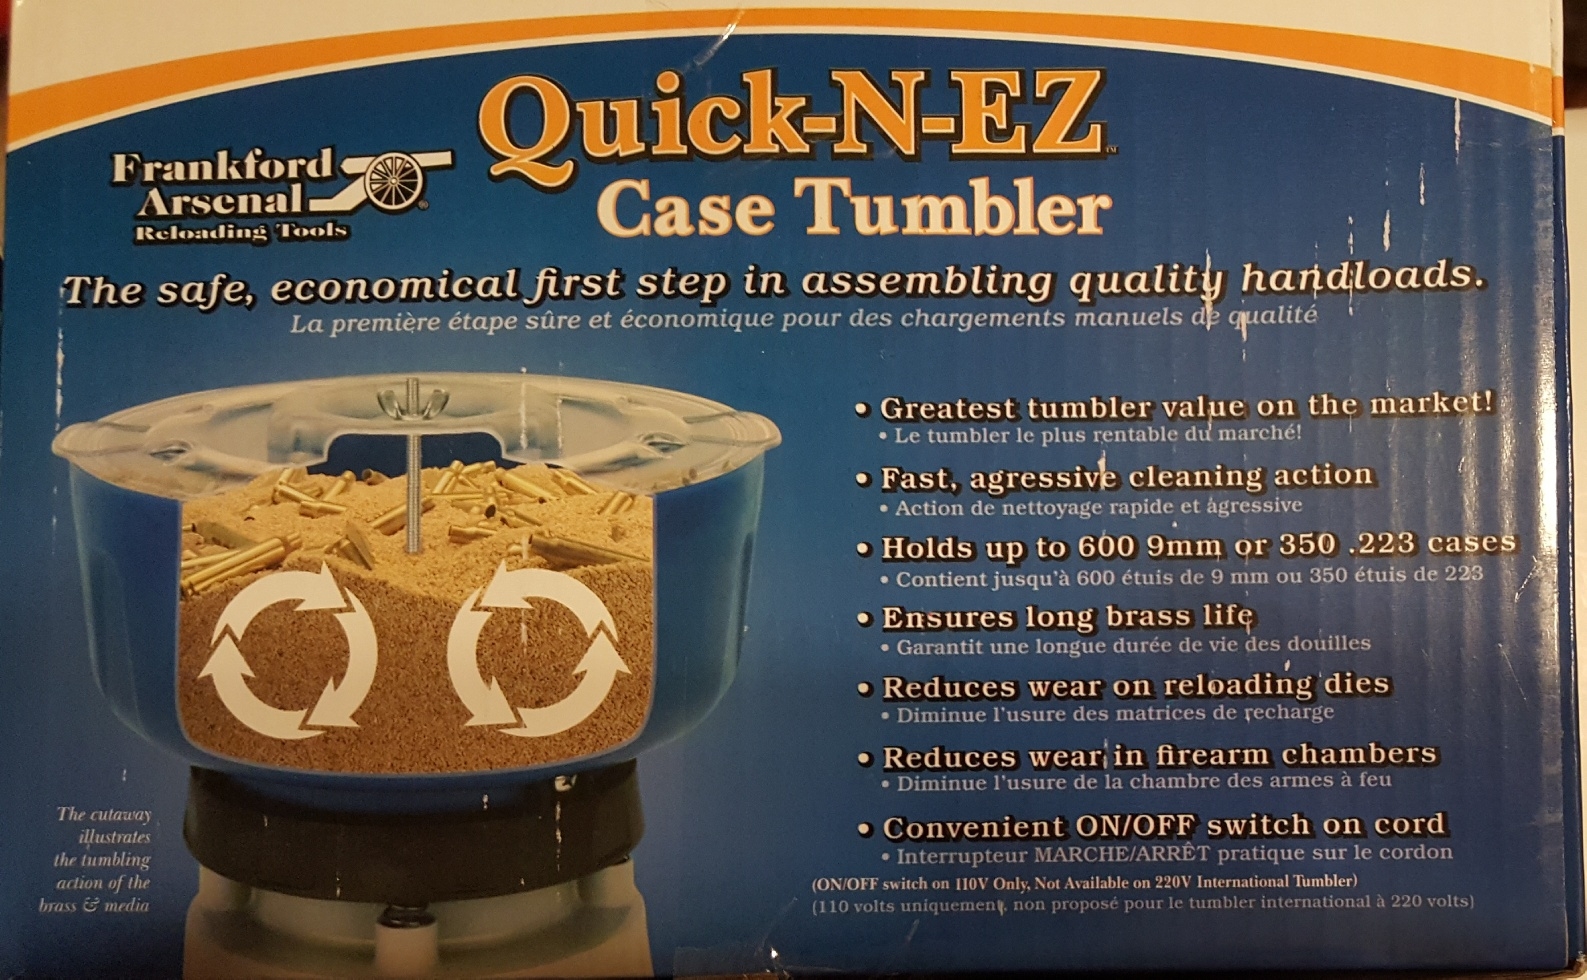 Frankford Arsenal - Quick-N-EZ Case Tumbler